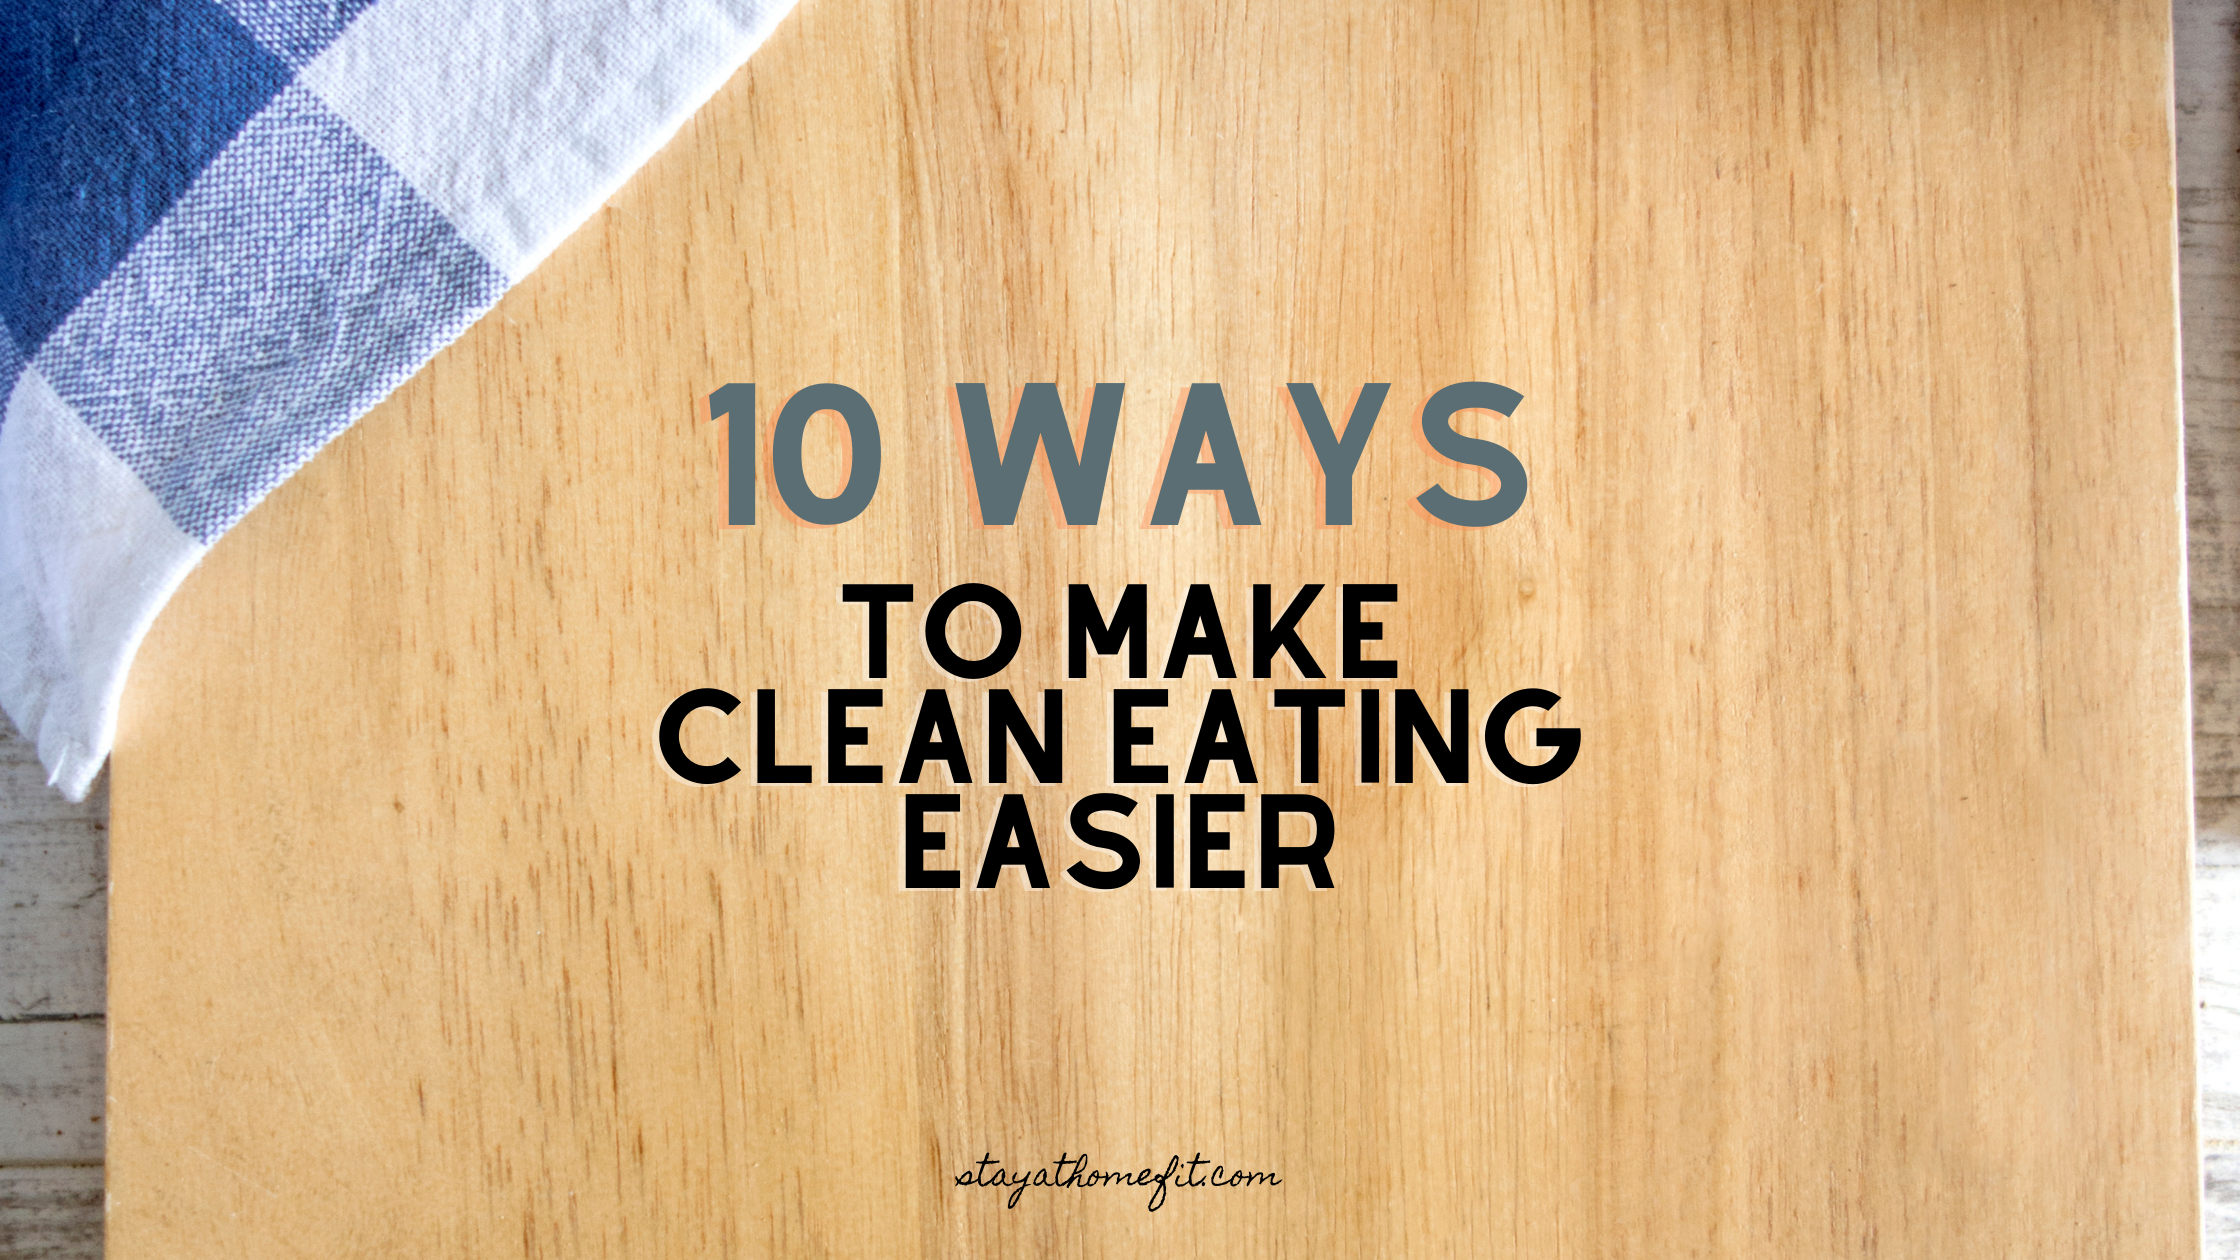 Blog Title: 10 Ways to Make Clean Eating Easier